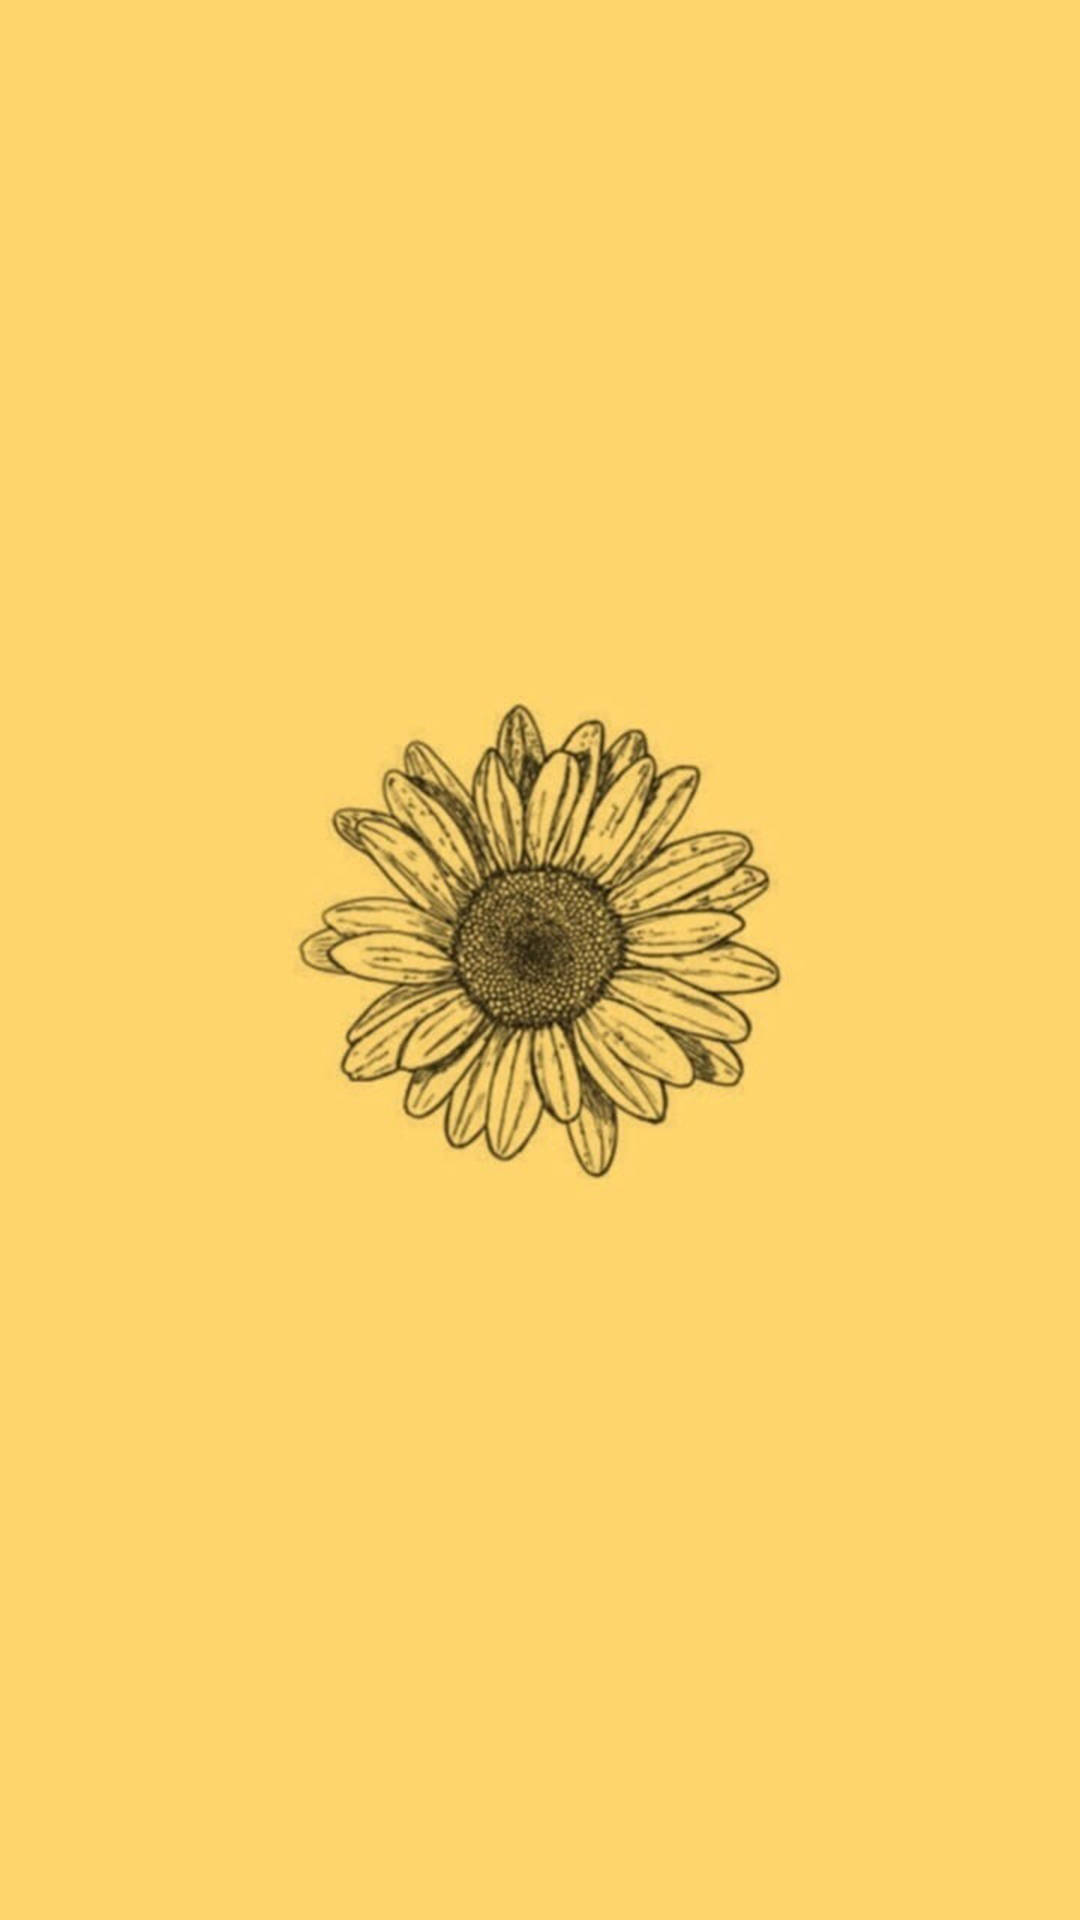 Minimalist Sunflower Art Iphone Background